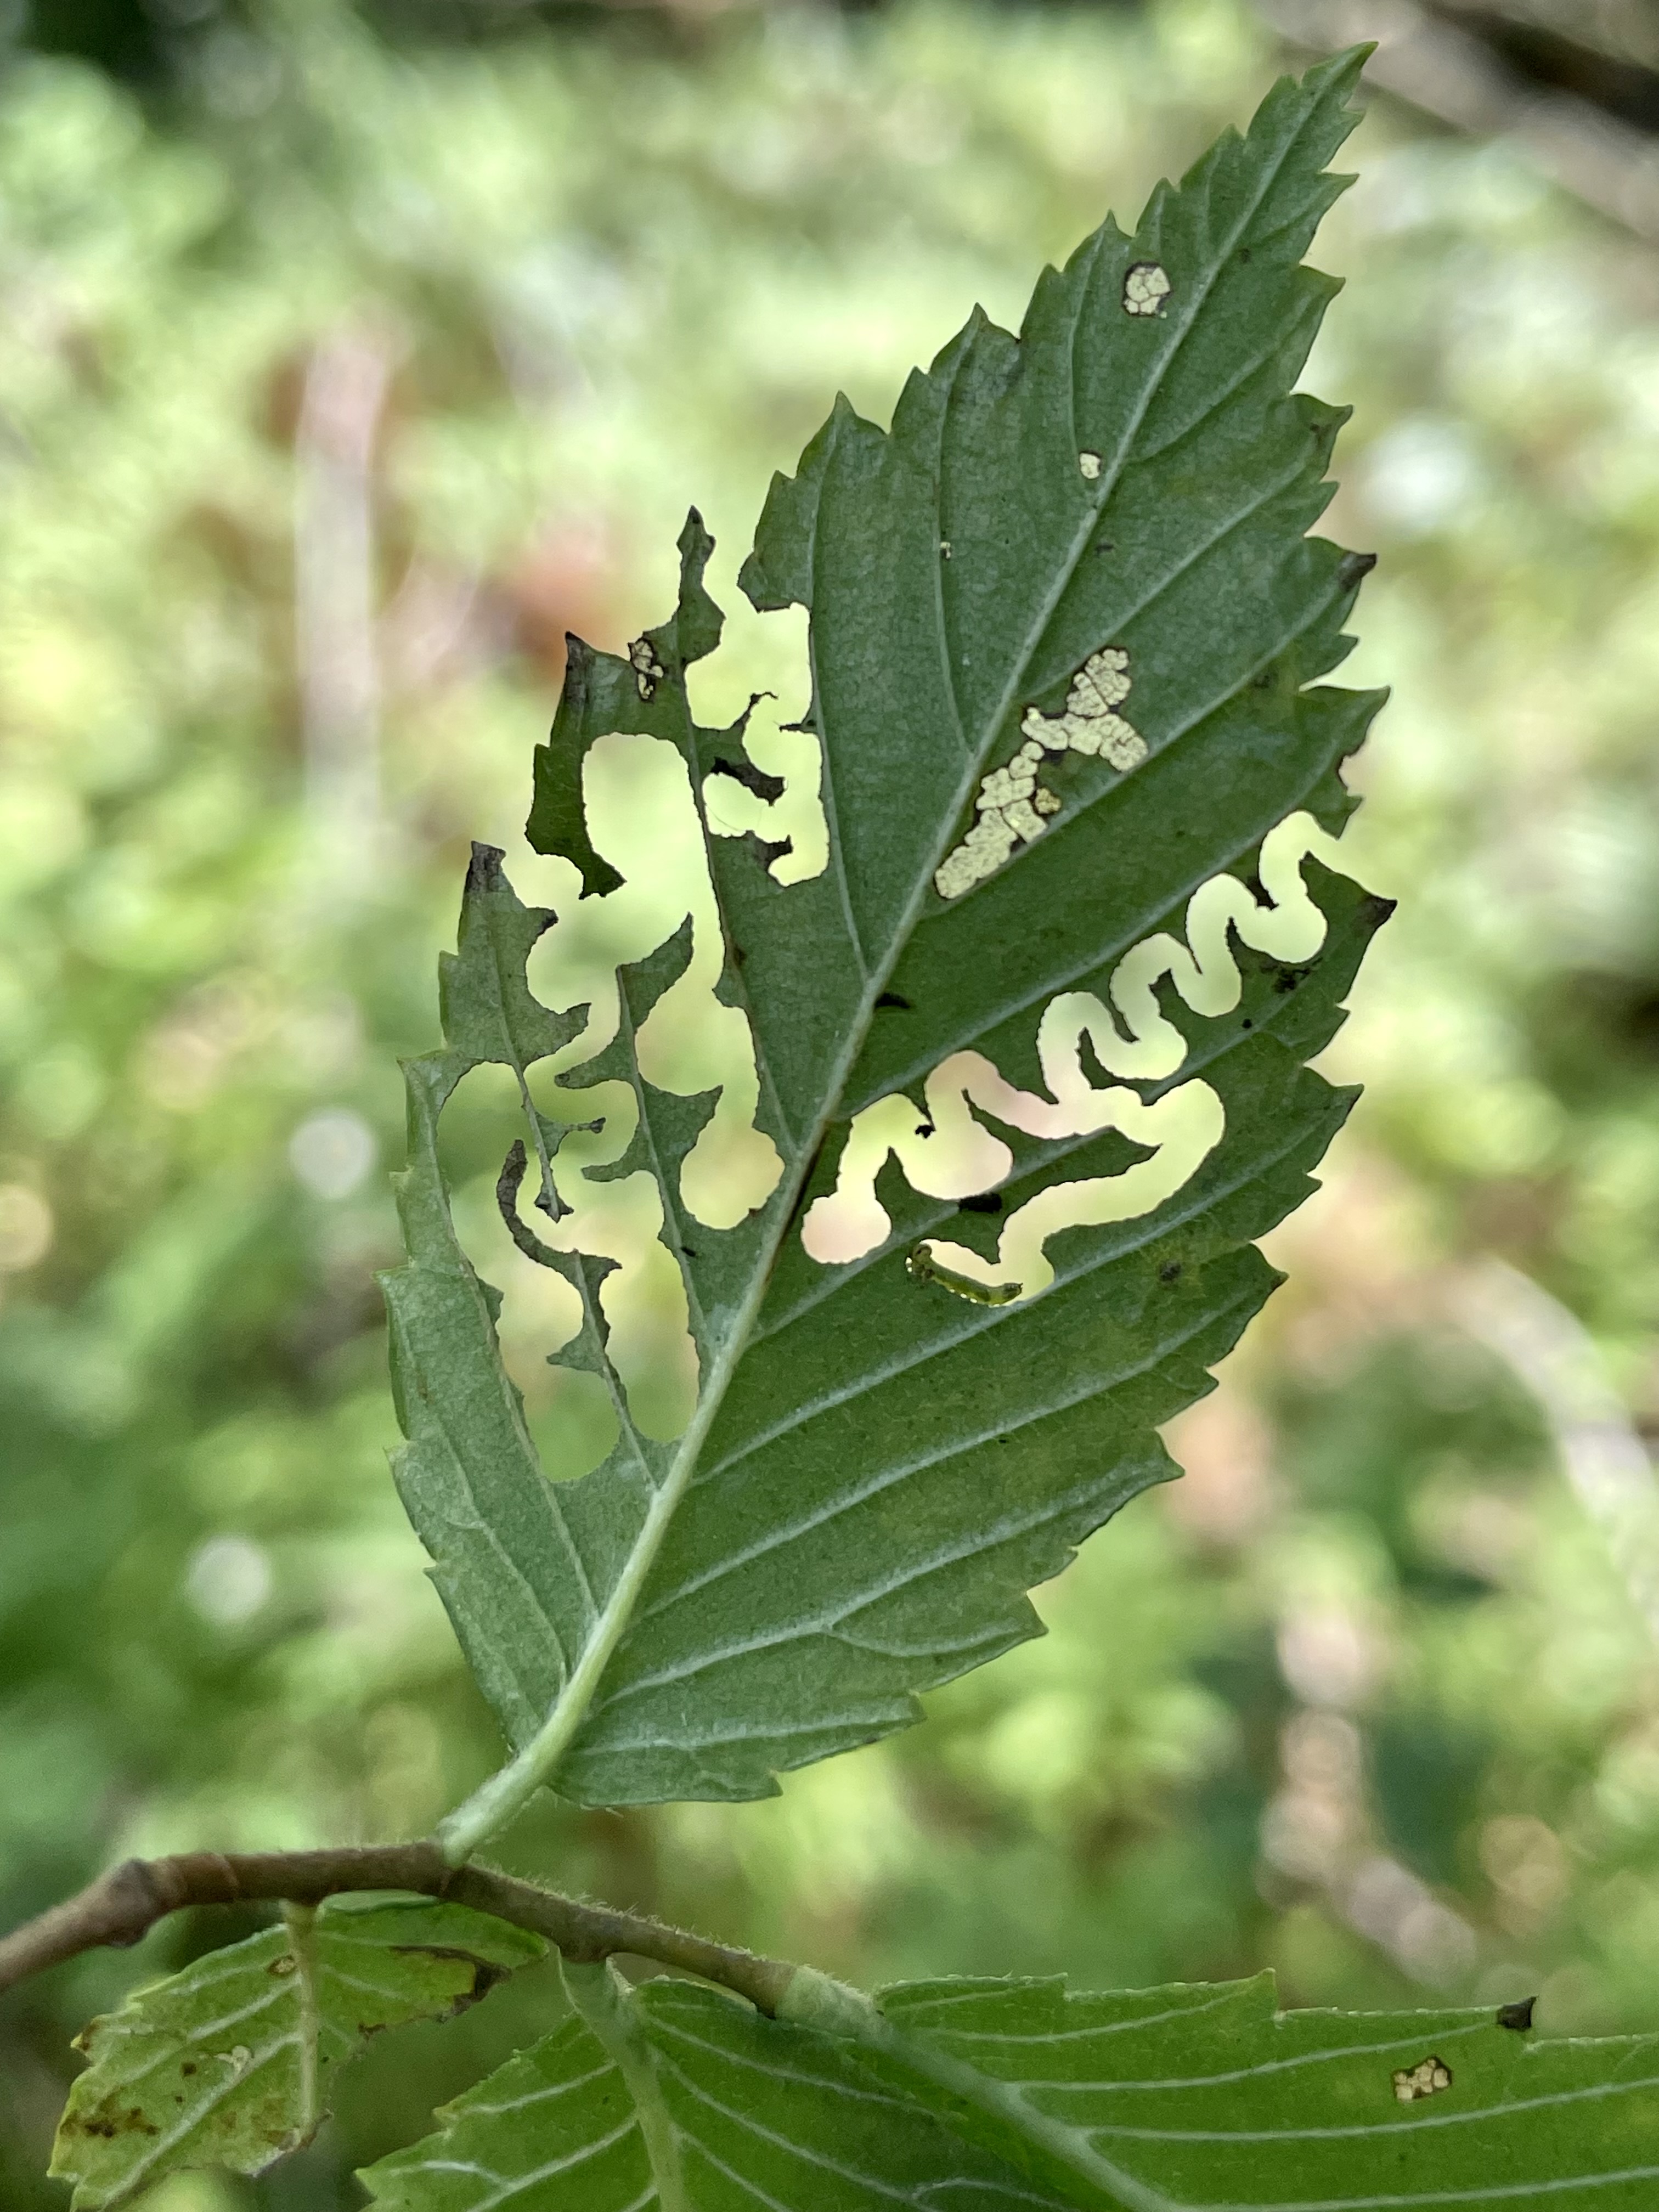 Zigzag pattern created by larvae in elm leaves